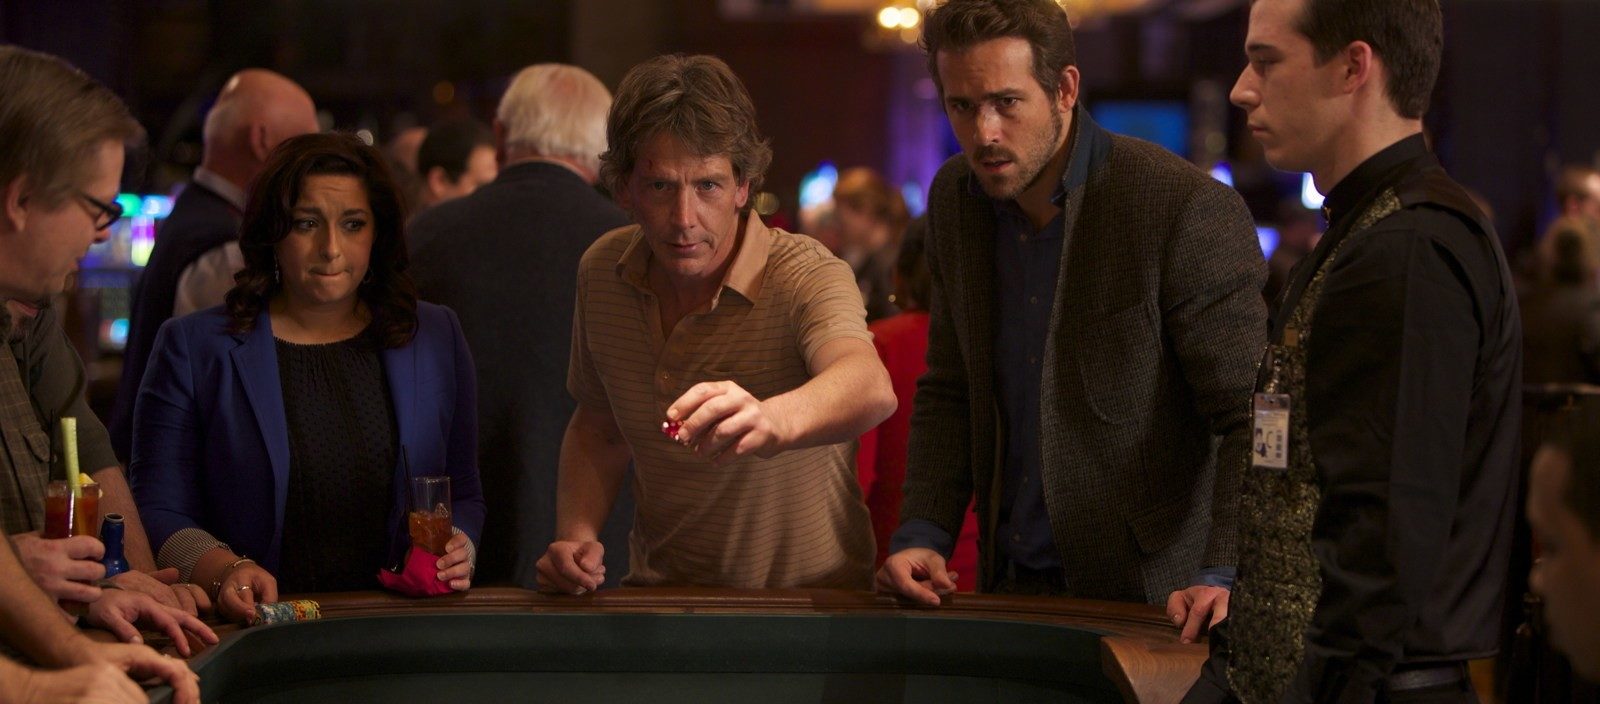 The Ten Best Gambling and Poker Films